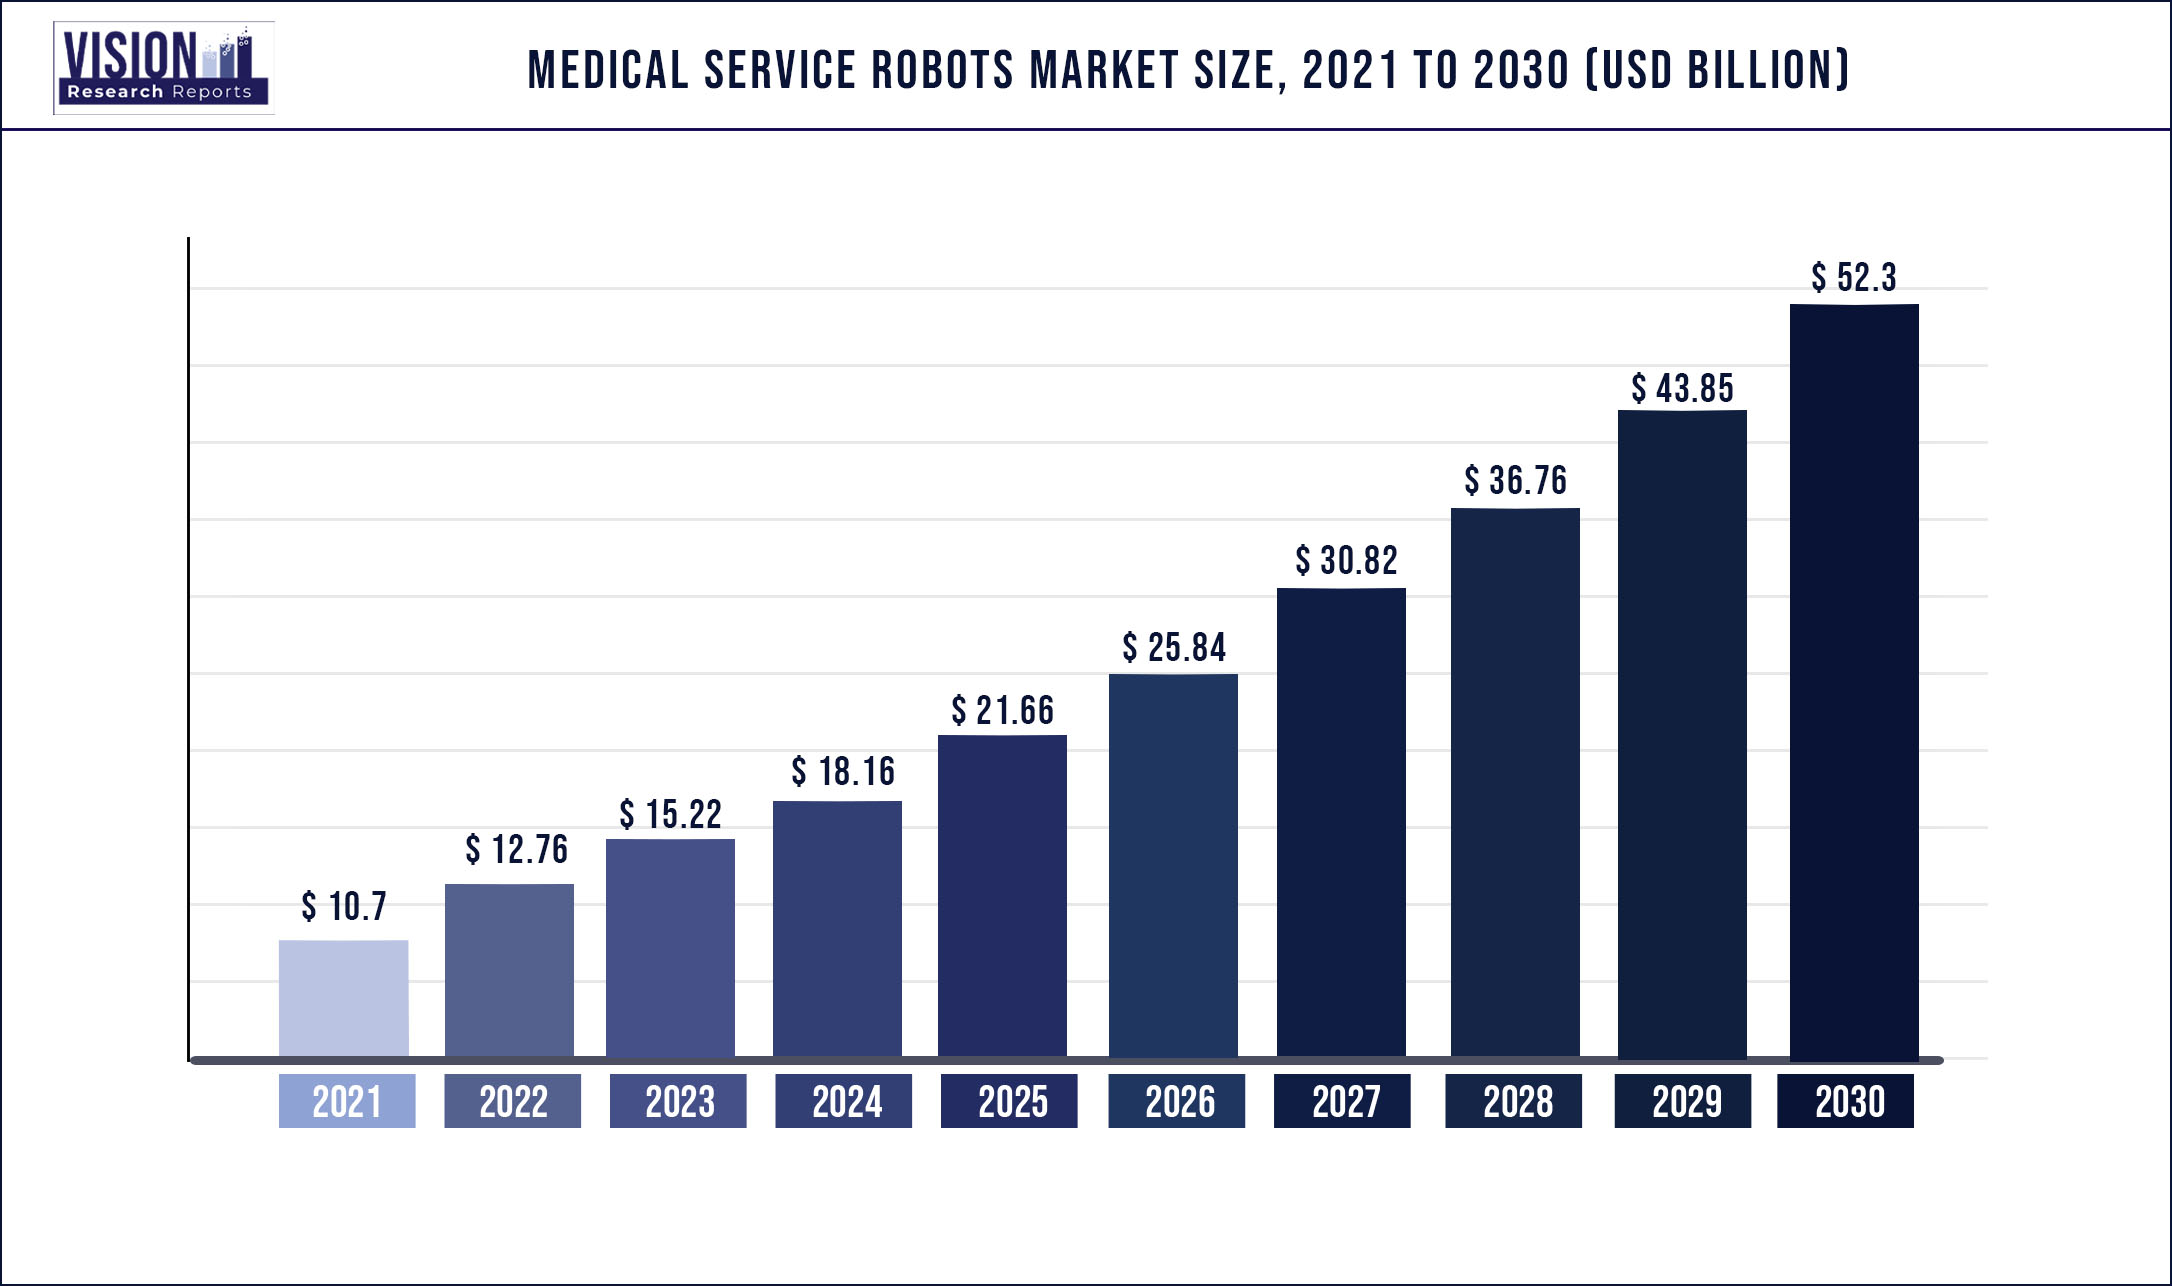 Medical Service Robots Market Size 2021 to 2030